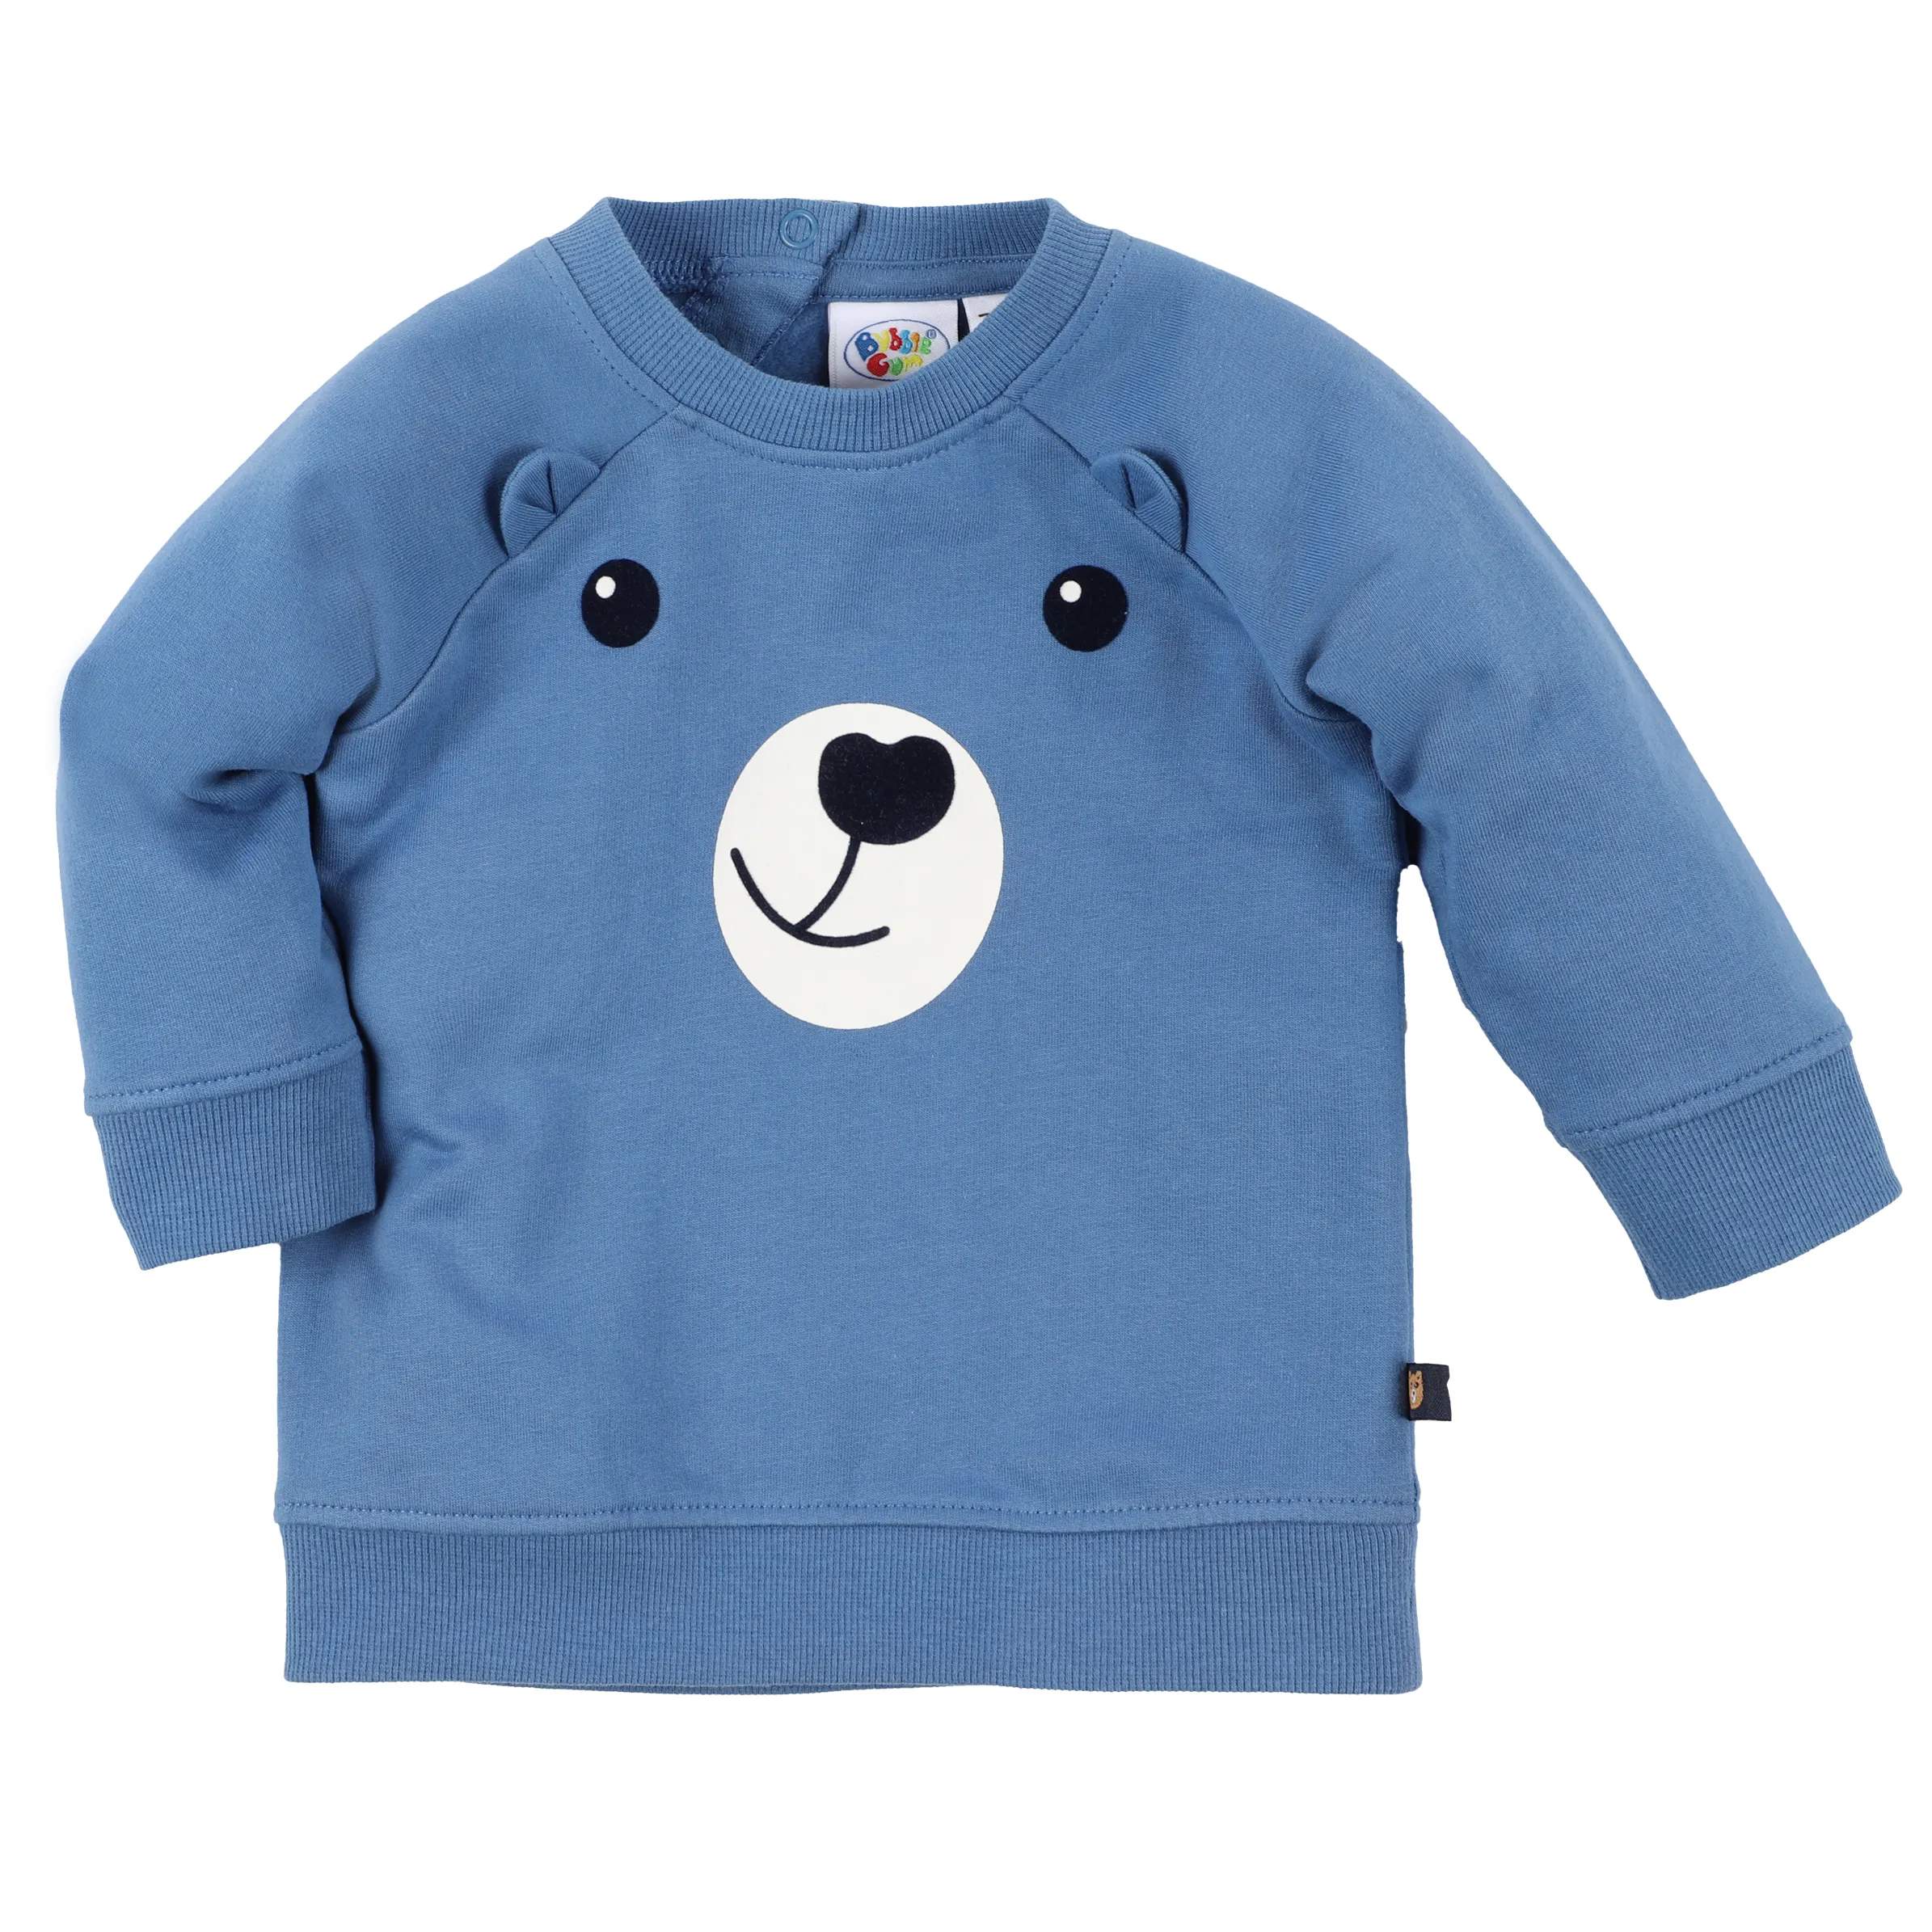 Bubble Gum BJ Sweatshirt in blau mit Bärchendruck Blau 884373 BLAU 1